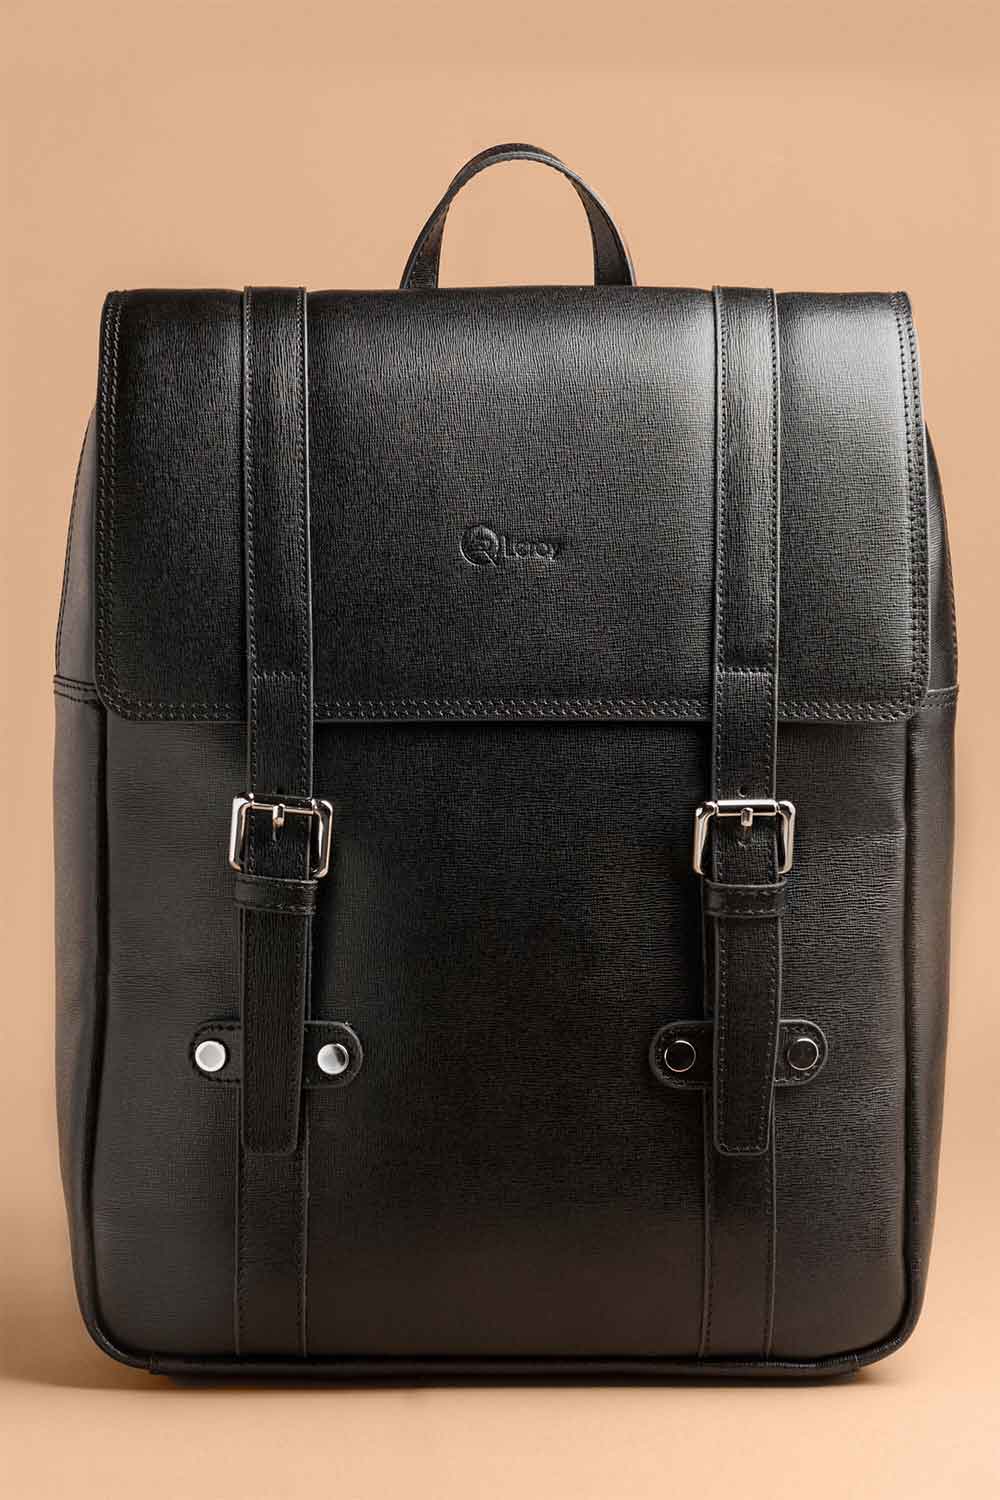 Dr Martens Mini Leather Backpack, ASOS